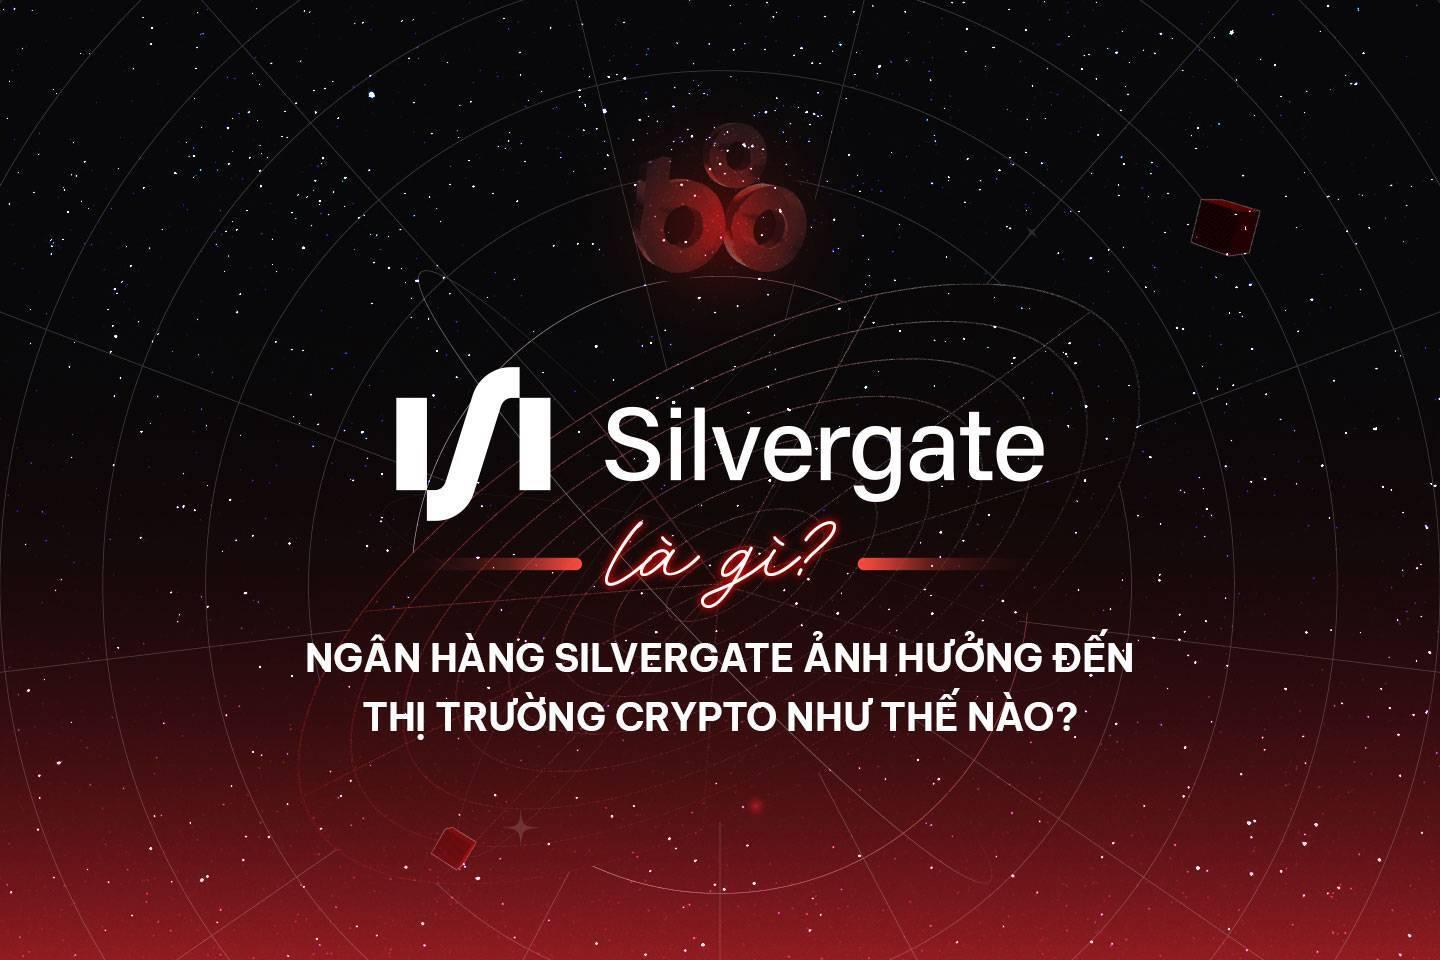 silvergate-la-gi-ngan-hang-silvergate-anh-huong-den-thi-truong-crypto-nhu-the-nao